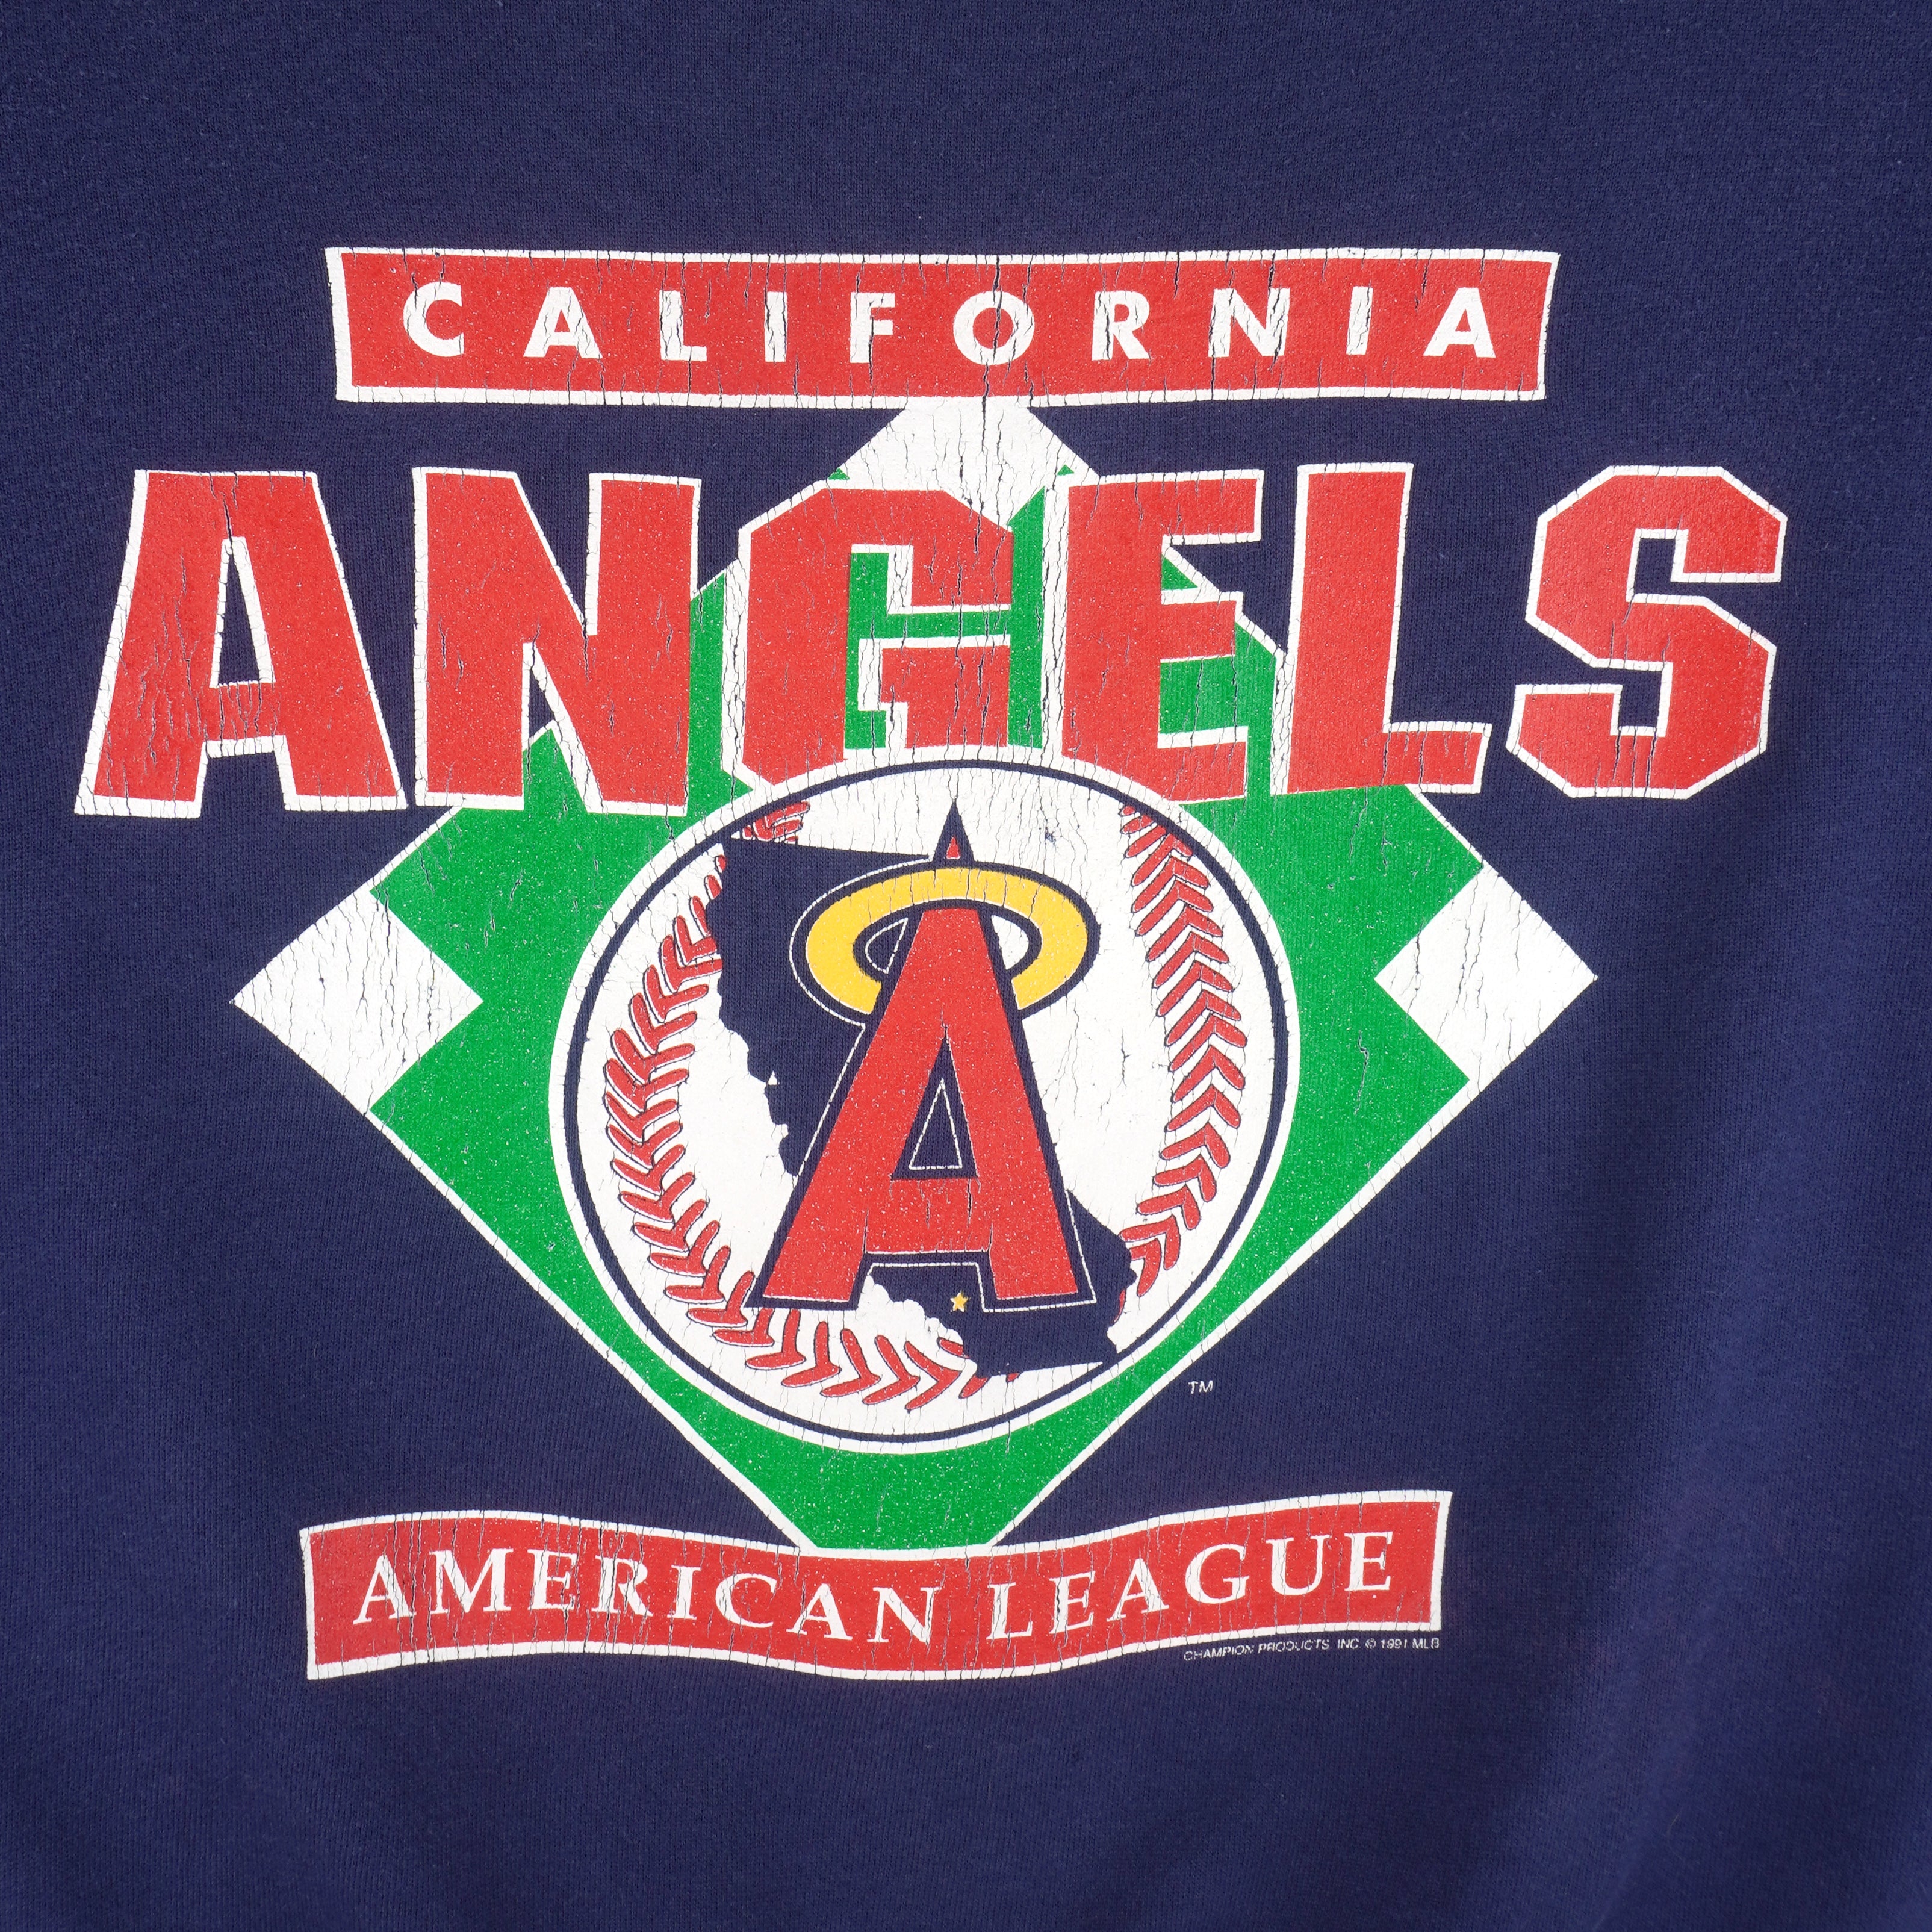 California Angels Merchandise, Angels Apparel, Gear